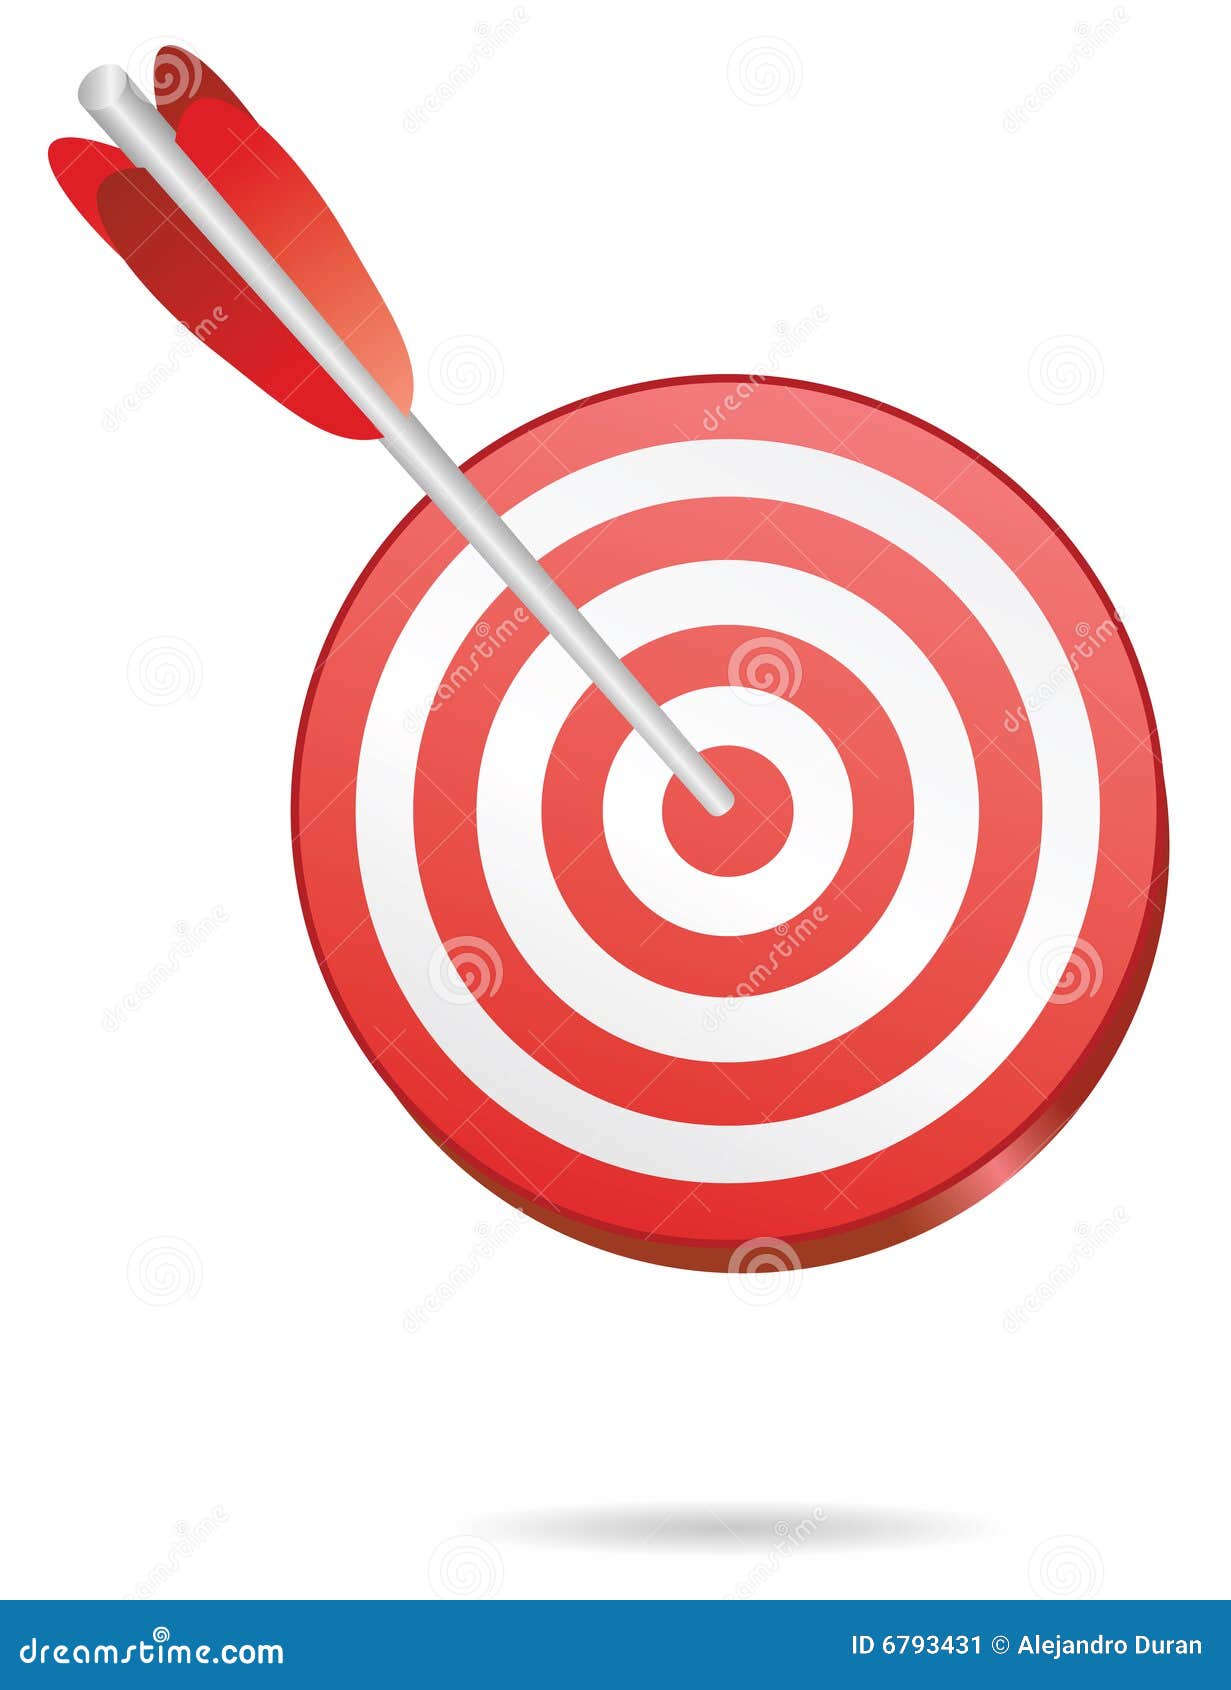 Target One Arrow Stock Image - Image: 6793431